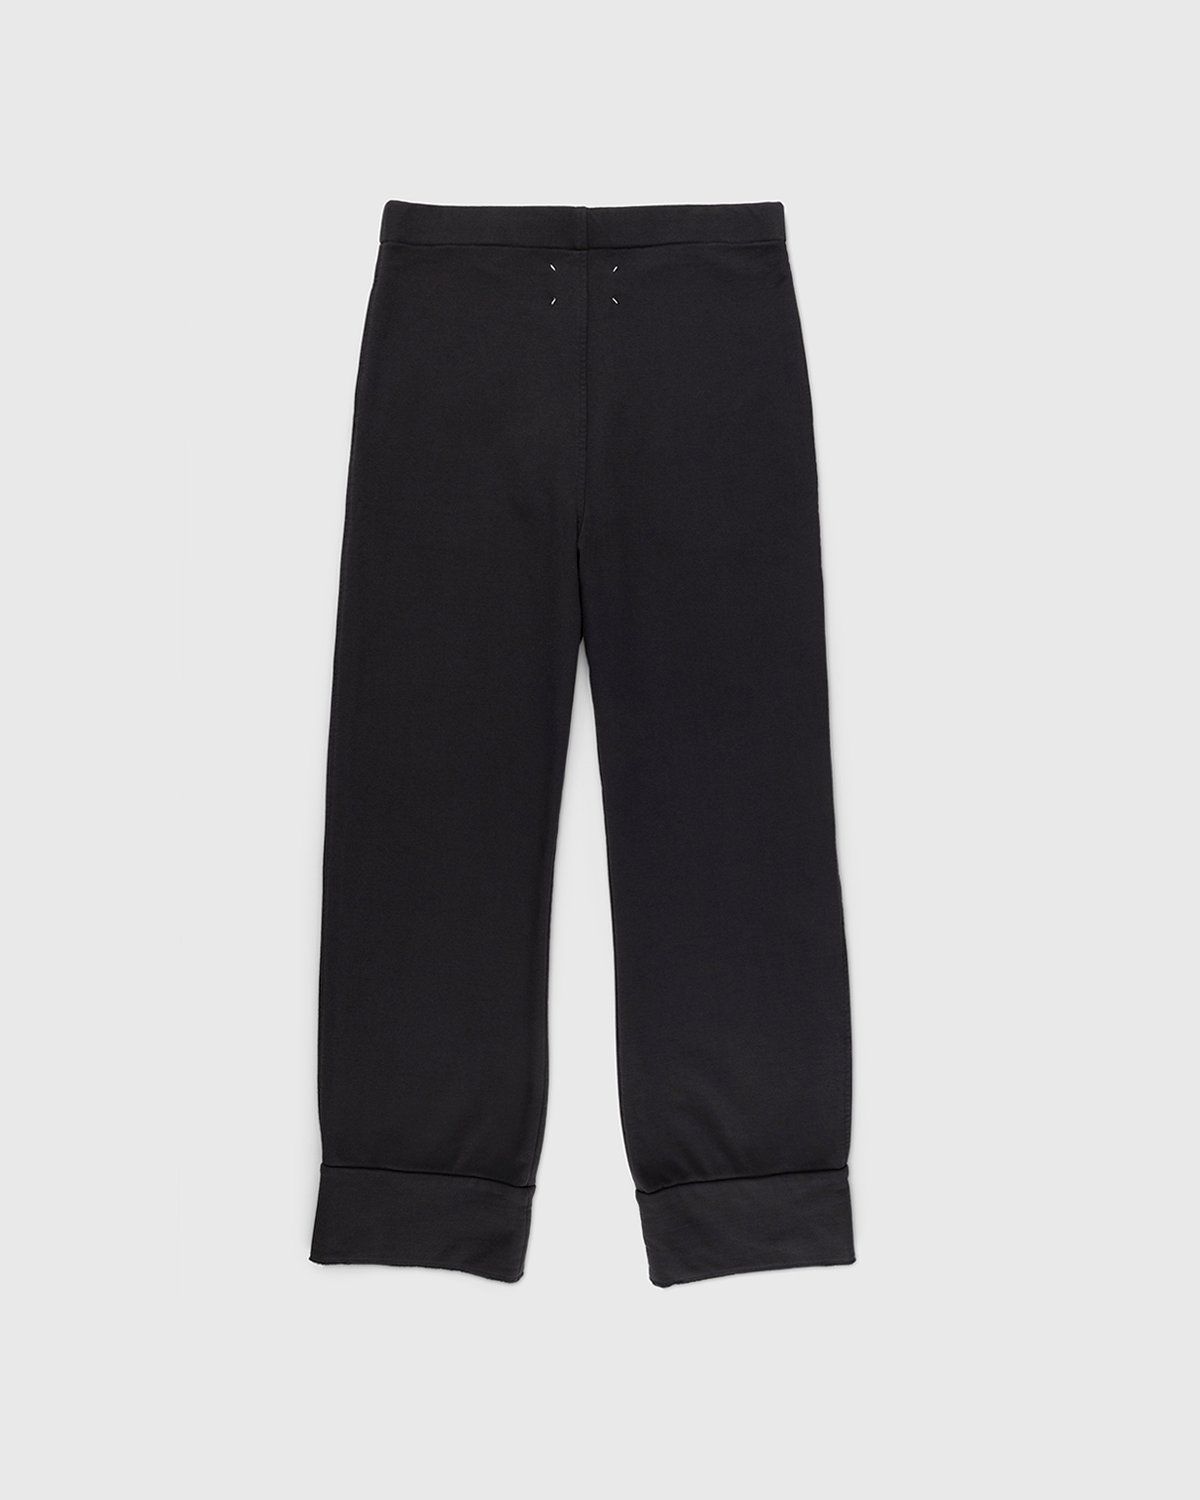 Maison Margiela – Tailored Cotton Trousers Washed Black - Pants - Black - Image 2